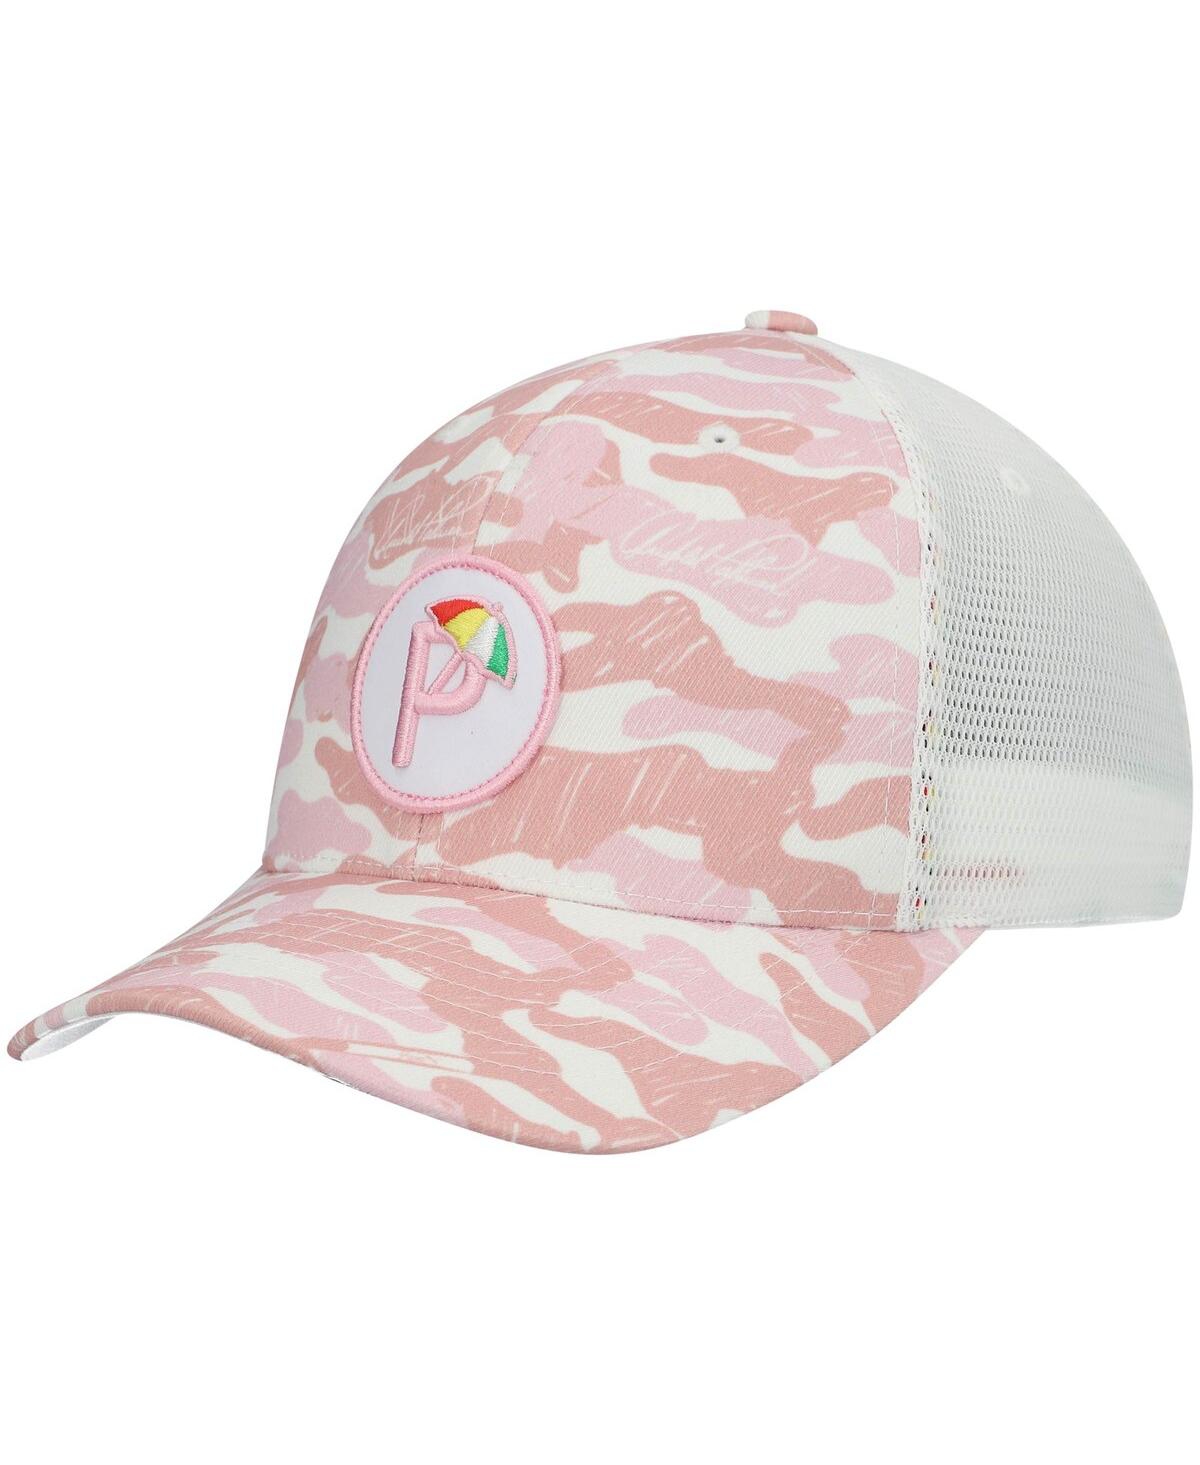 Men's Puma Pink Arnold Palmer Invitational Camo P Snapback Hat - Pink